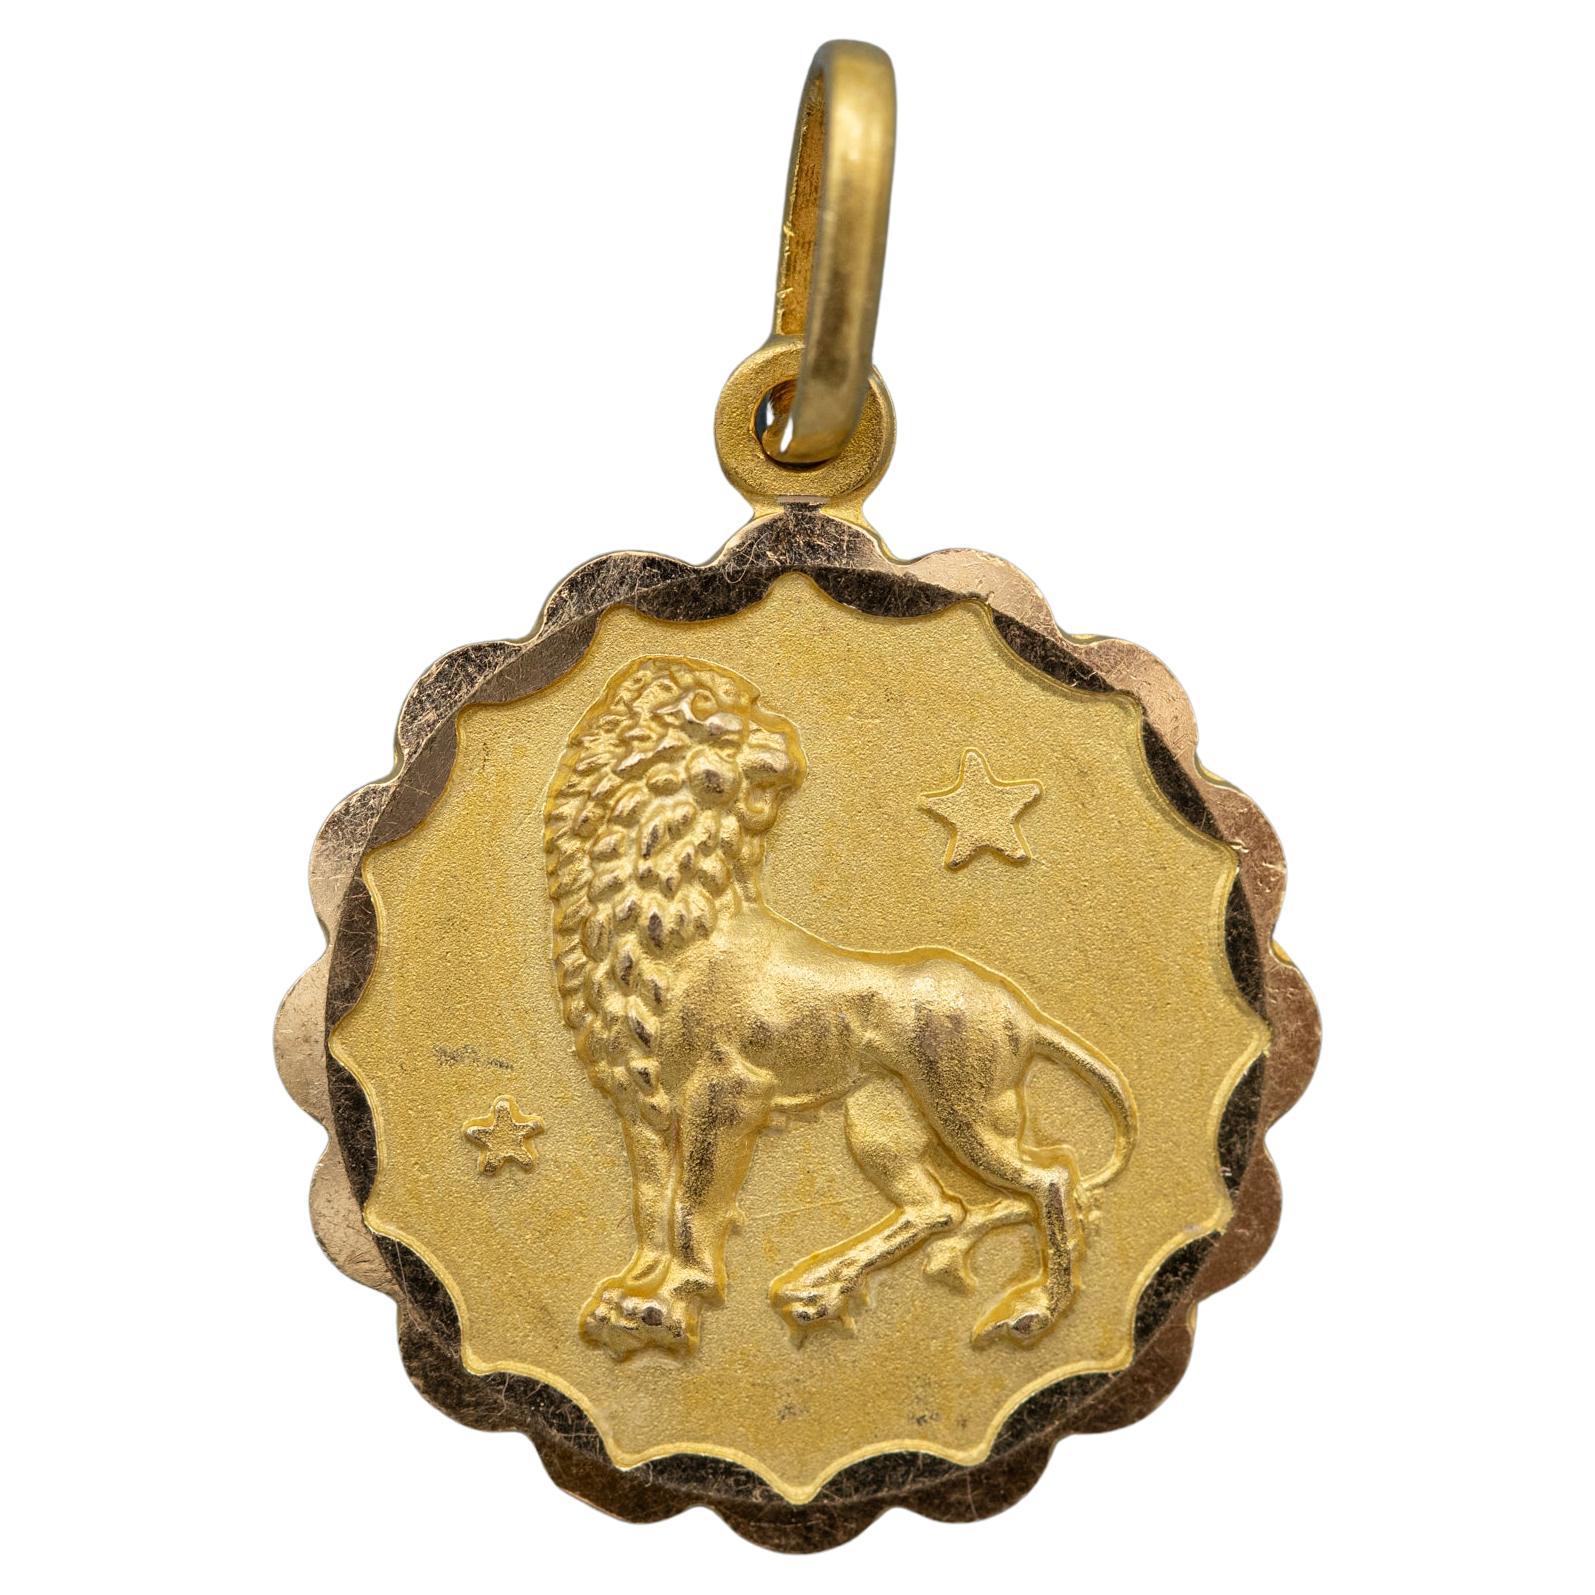 Vintage 18 k Italian zodiac pendentif - Leo charm - solid yellow gold - Star sign